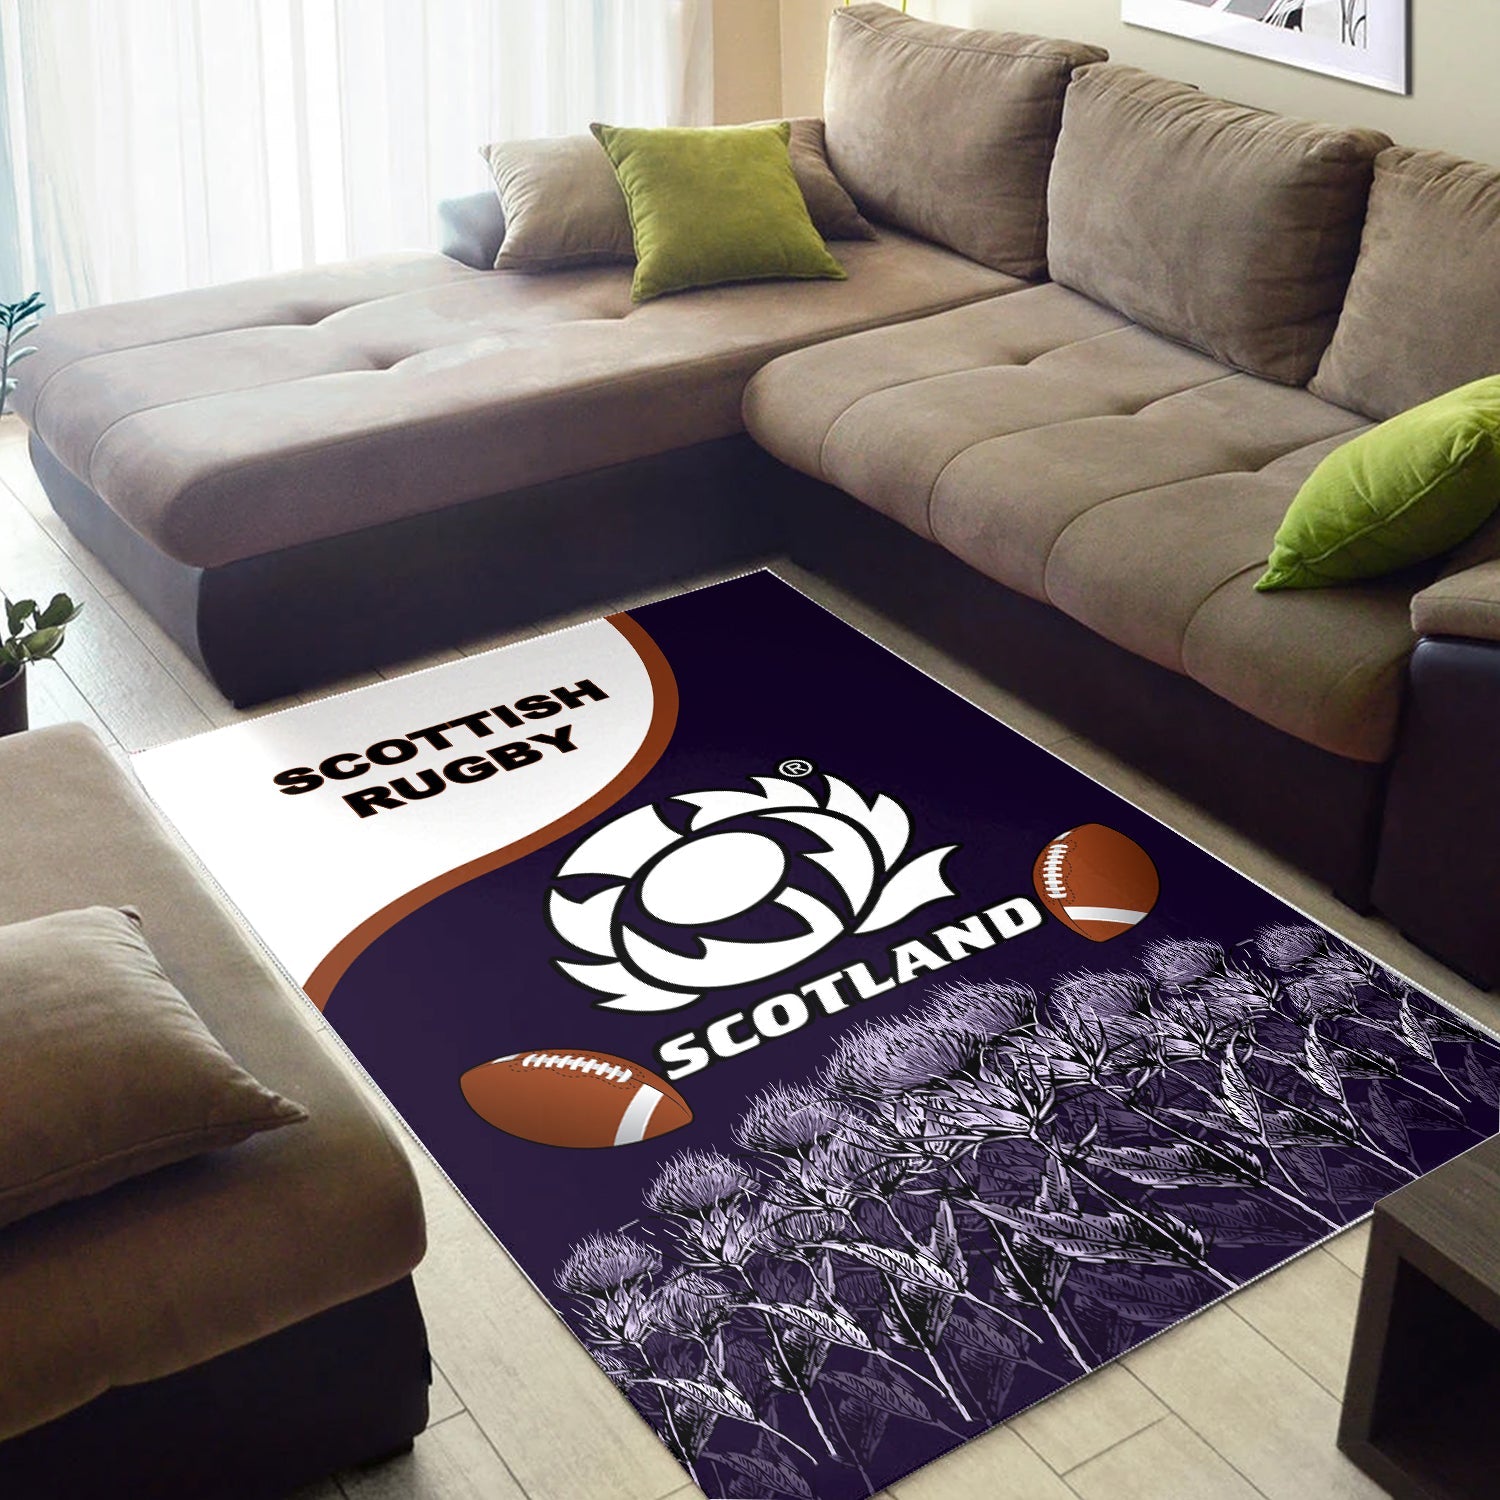 scotland-rugby-union-area-rug-thistle-flower-purple-original